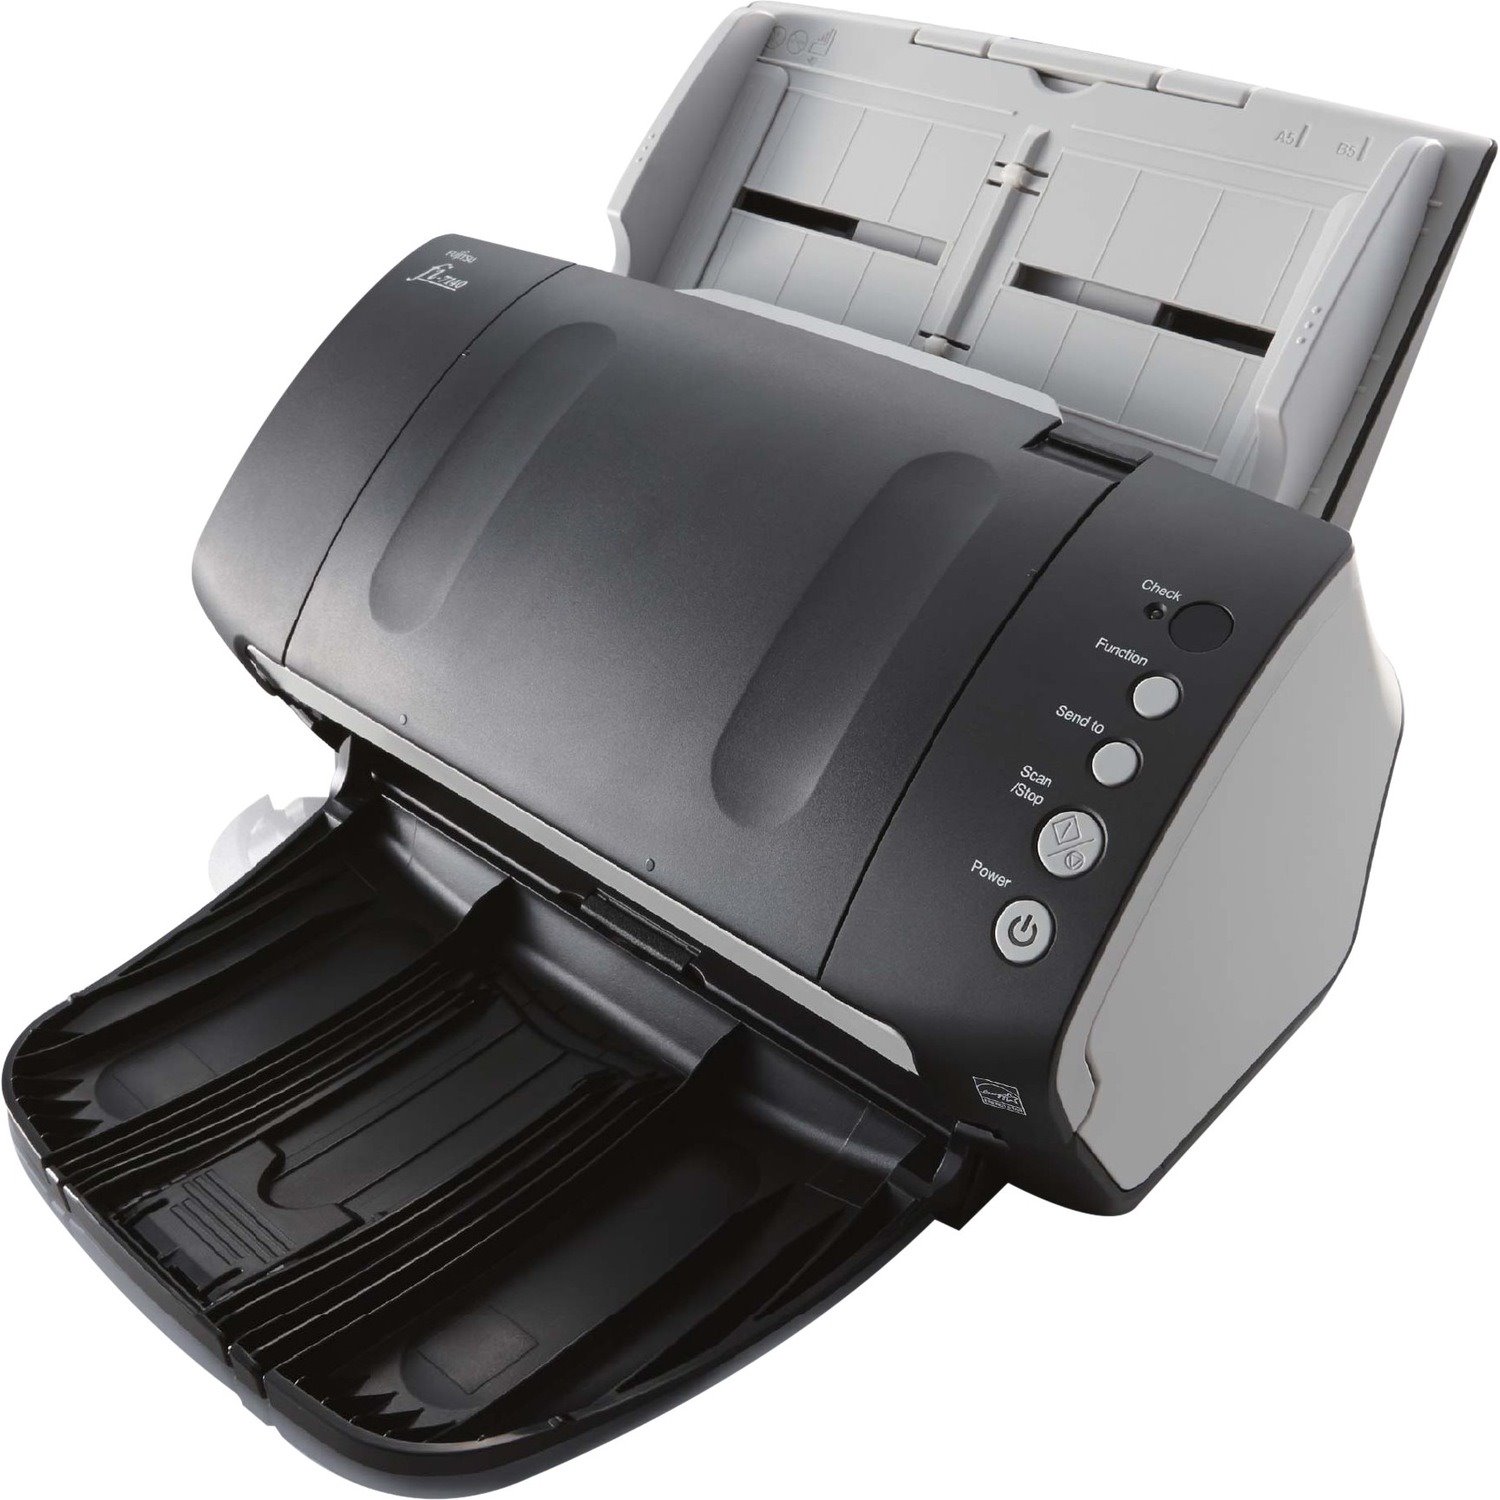 Fujitsu ImageScanner fi-7140 Sheetfed Scanner - 600 dpi Optical